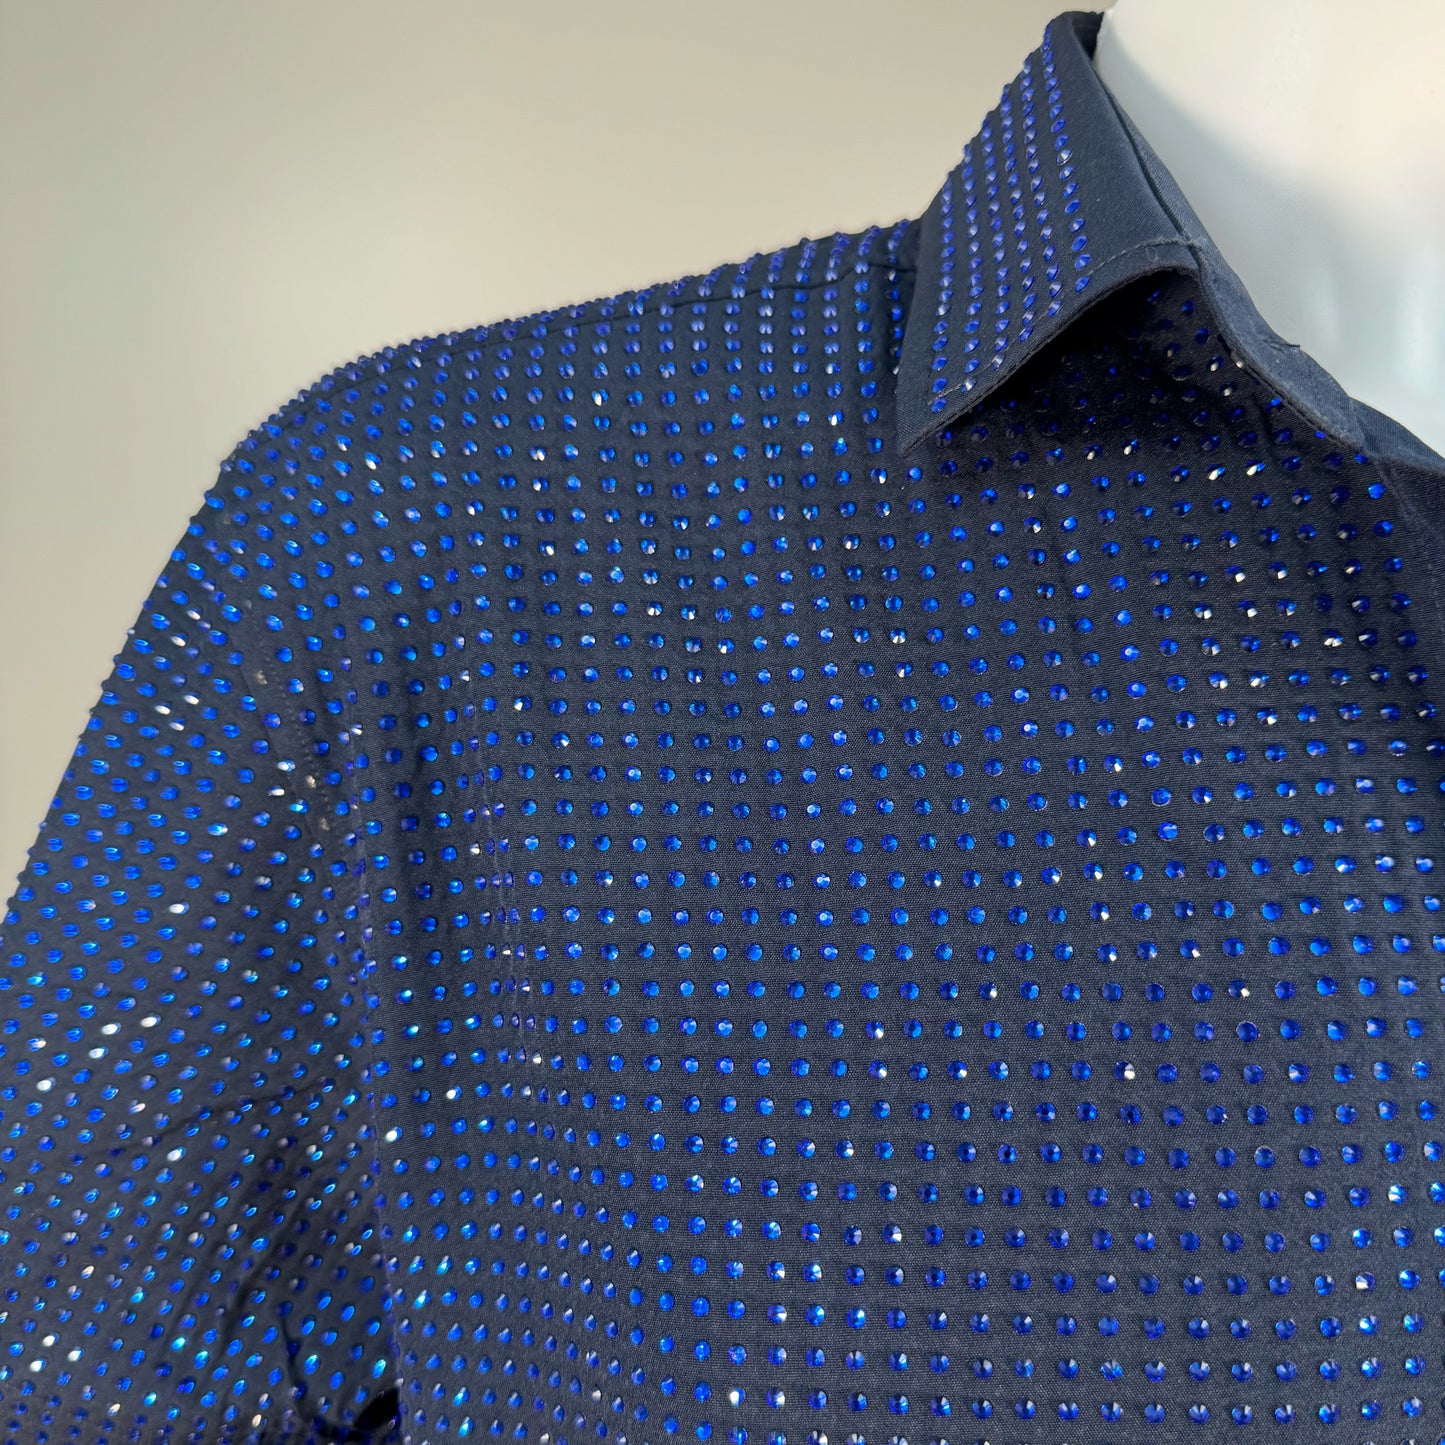 Sapphire Crystals on Navy Fabric Dress Shirt (Short Sleeves)